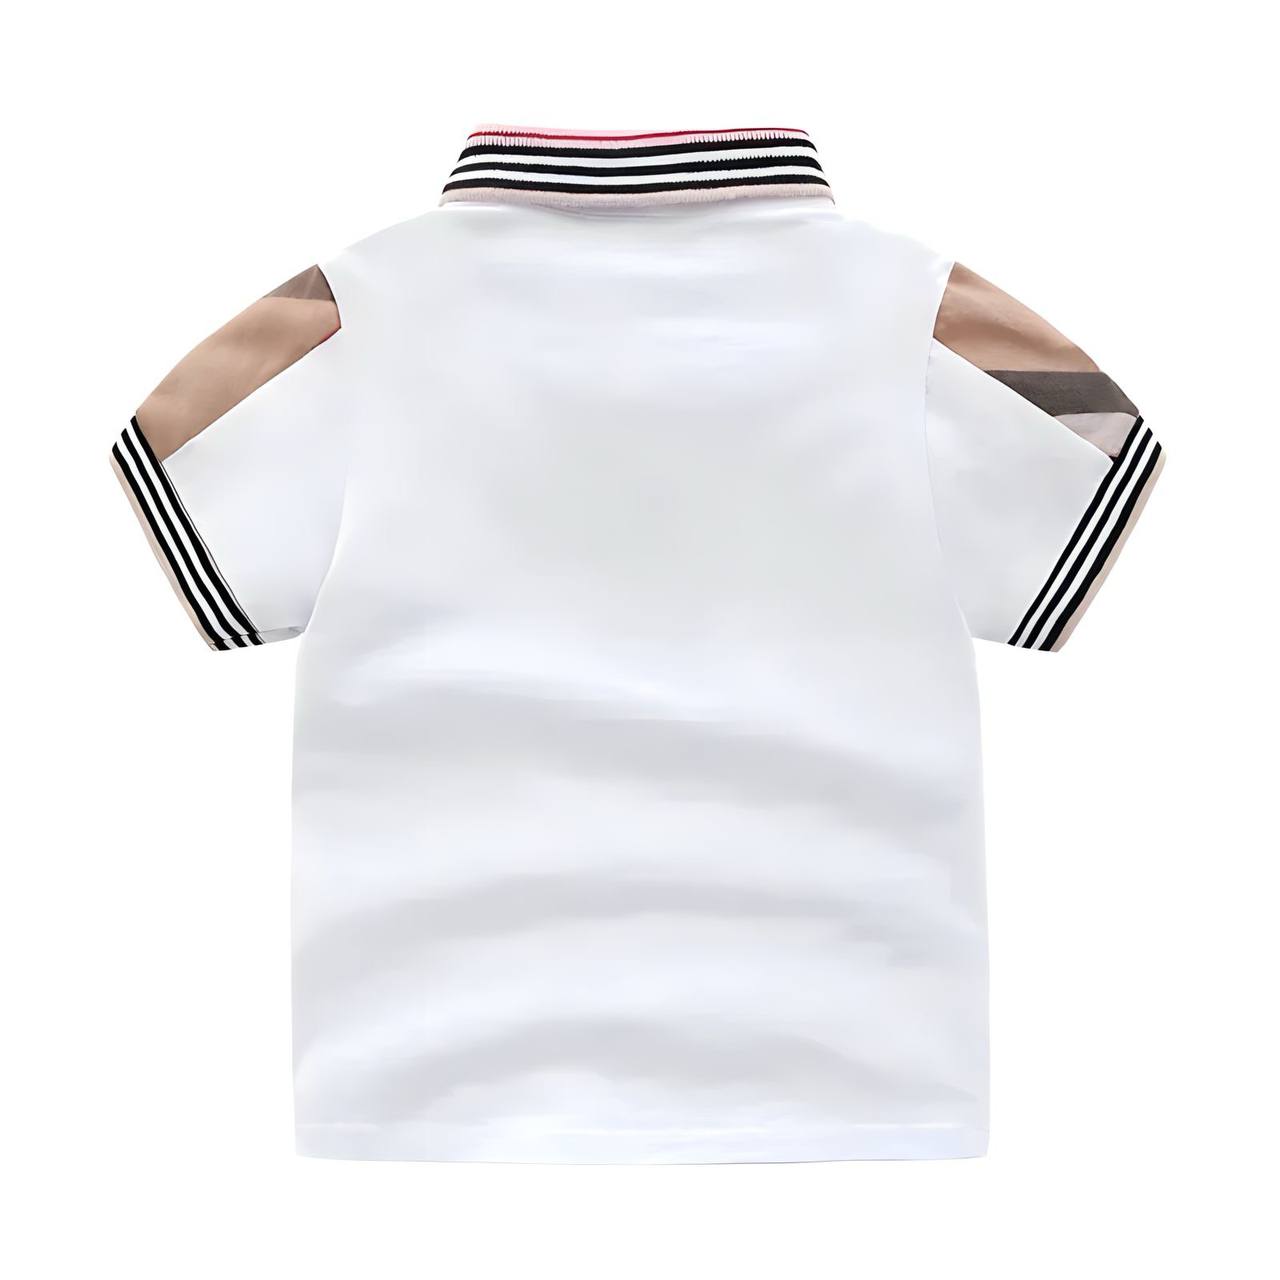 Boys' Summer White Polo T-Shirt